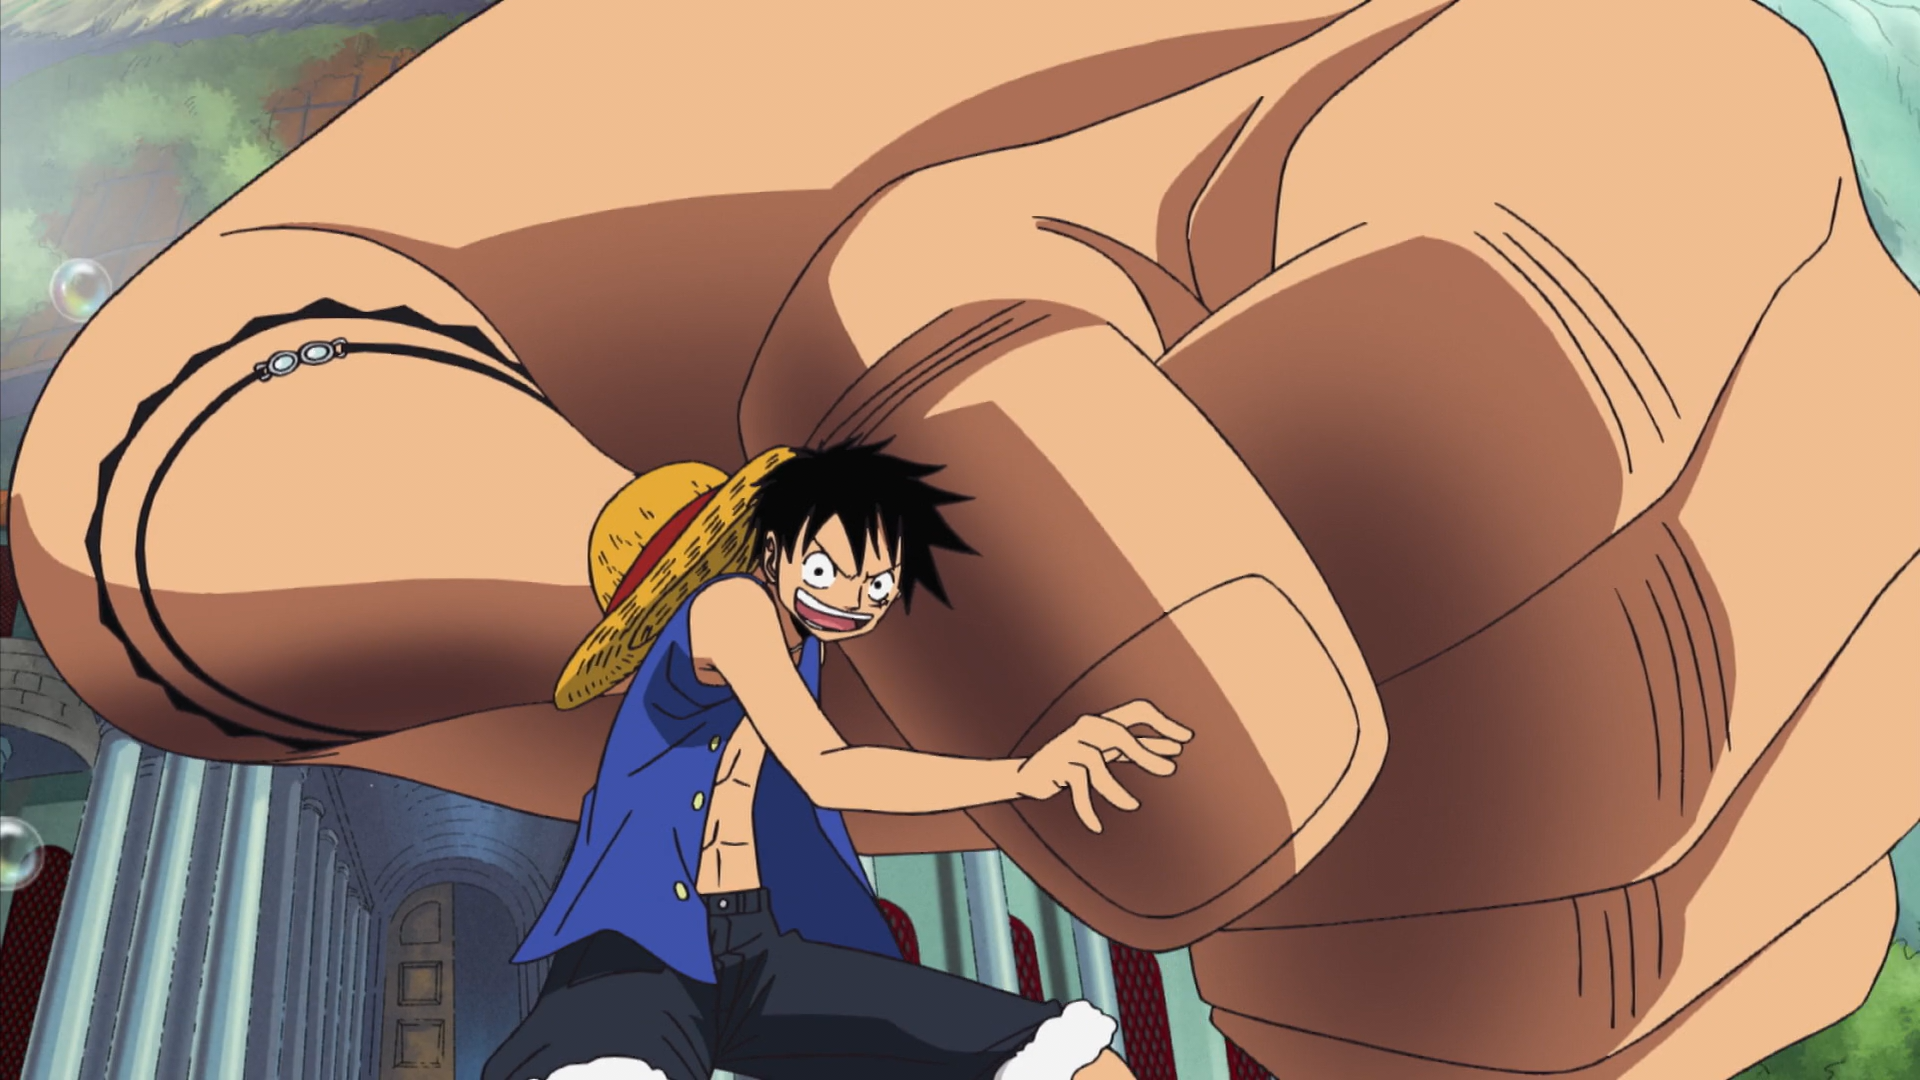 Luffy Gear 5 vs Kaido Power Levels - One Piece 1071 - SP Senpai 🔥 